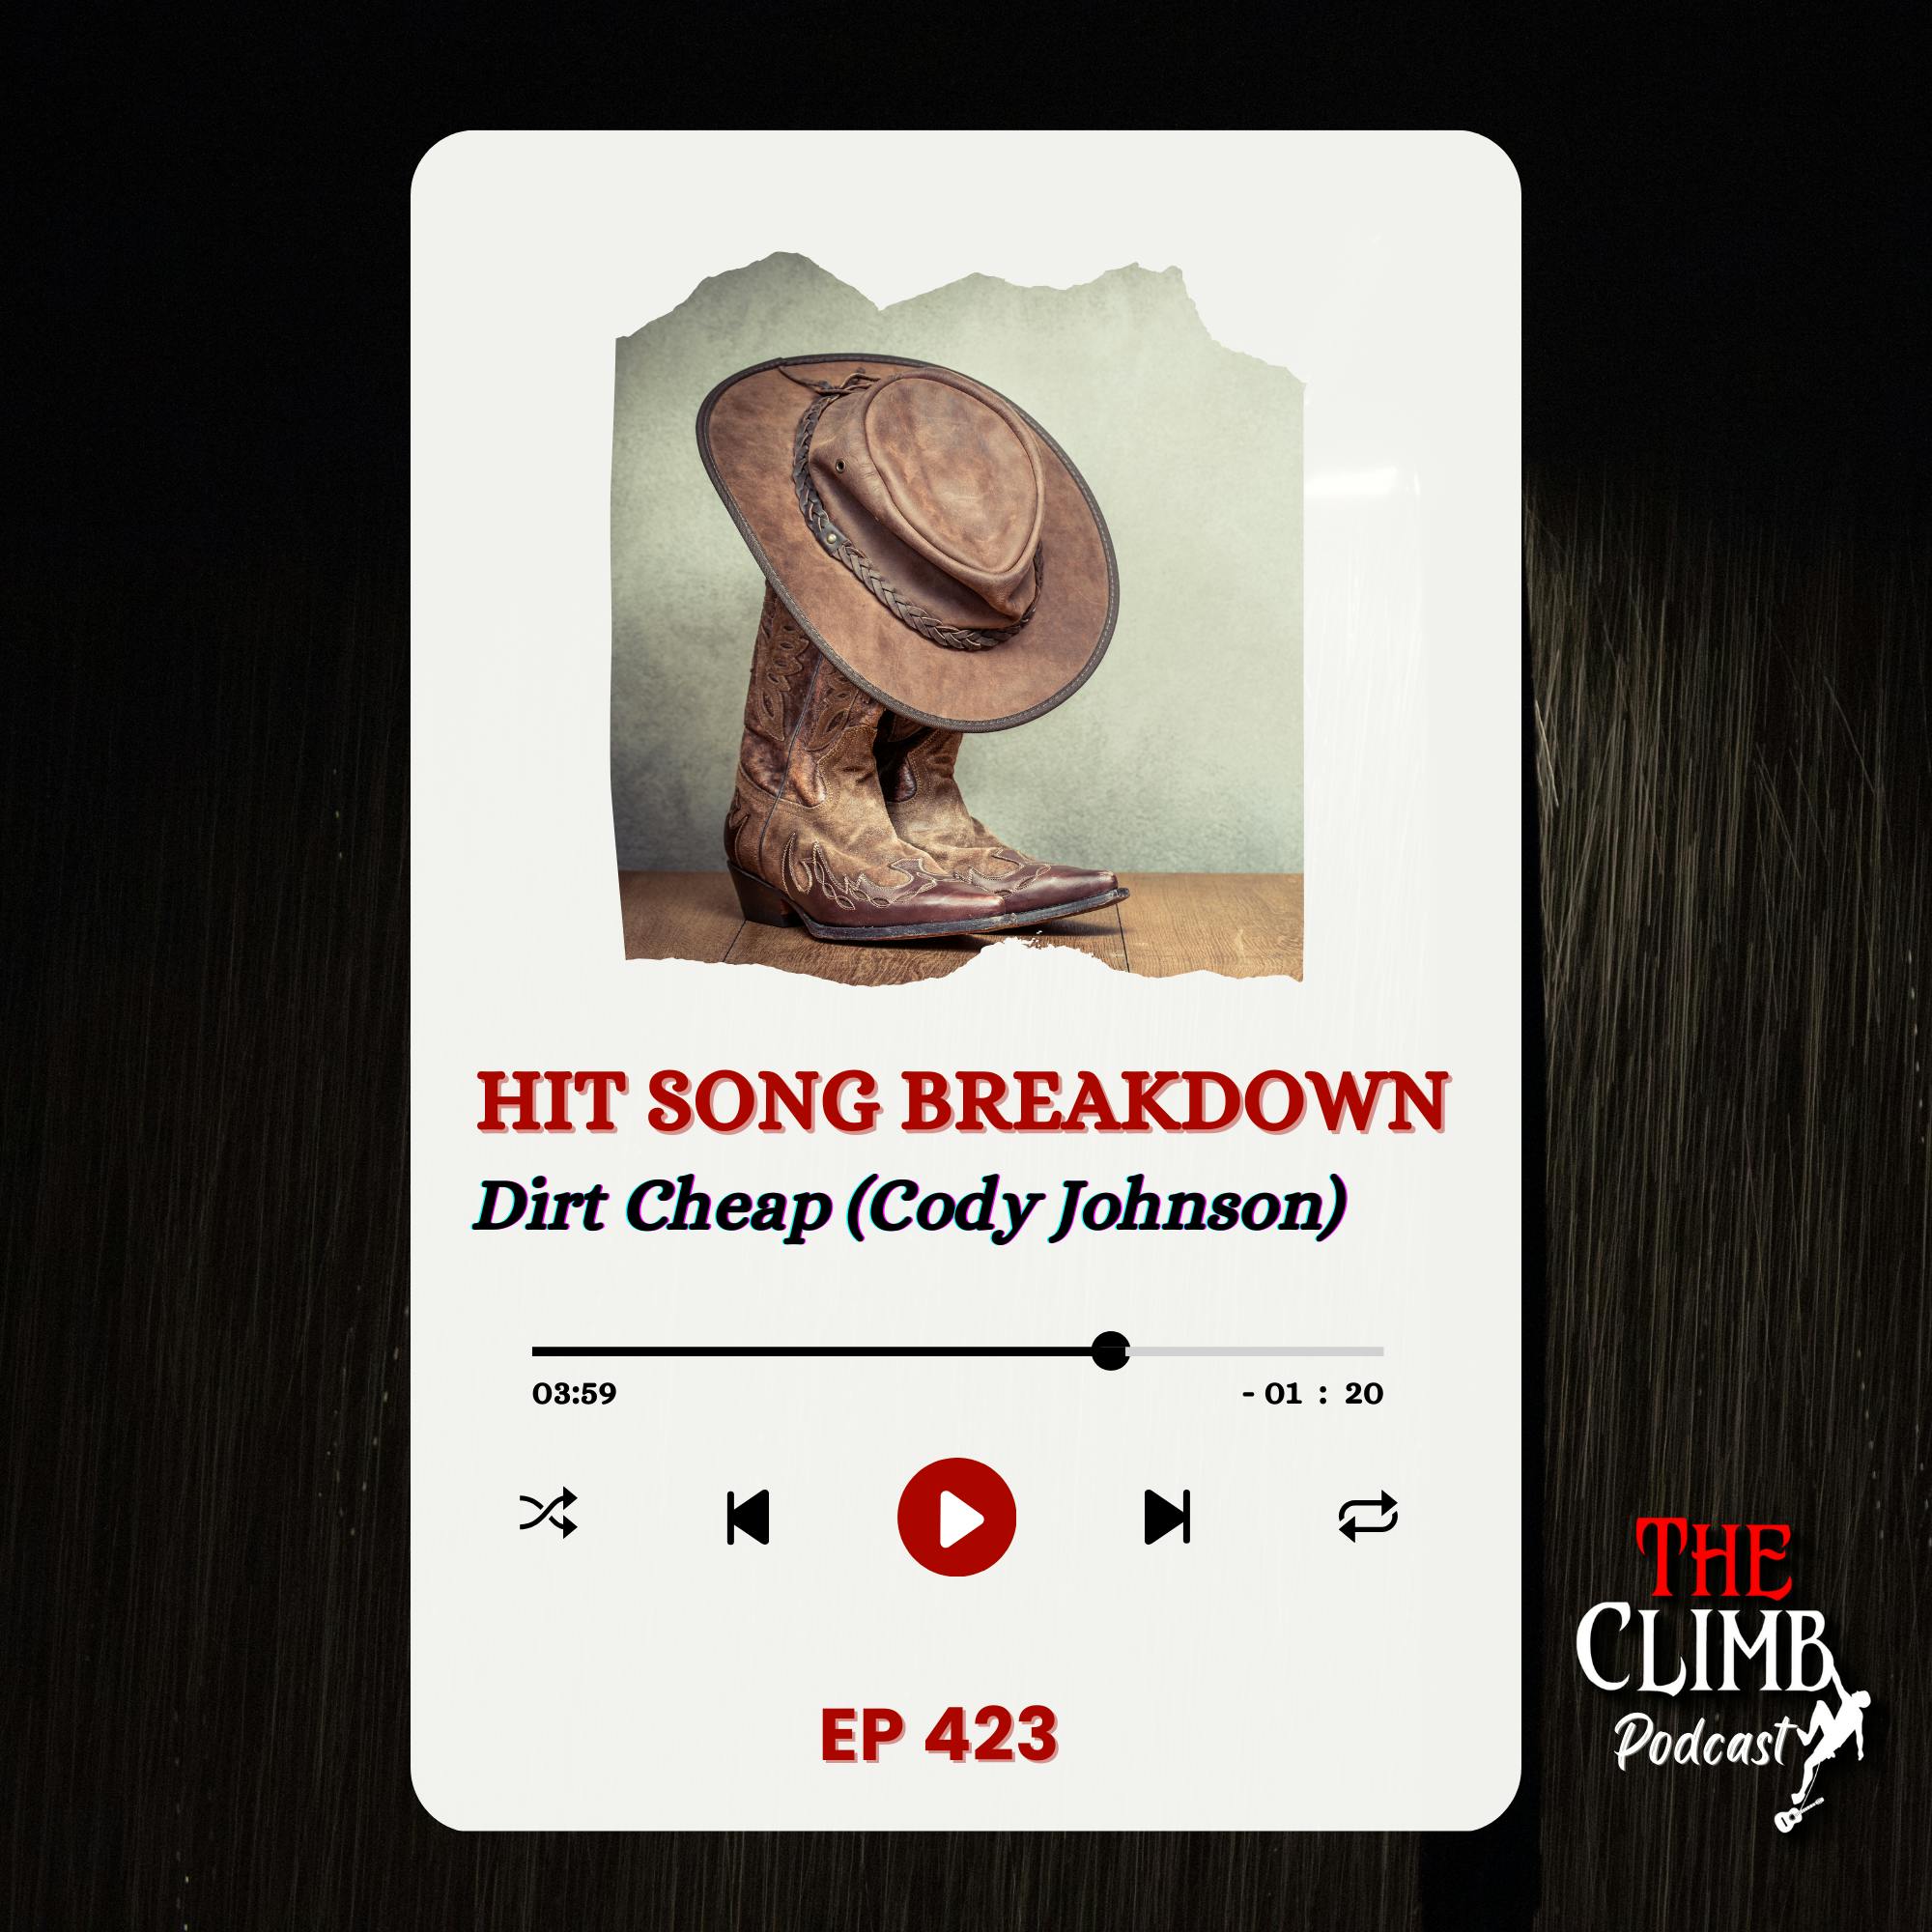 Ep 423: Hit Song Breakdown - ”Dirt Cheap” by Cody Johnson